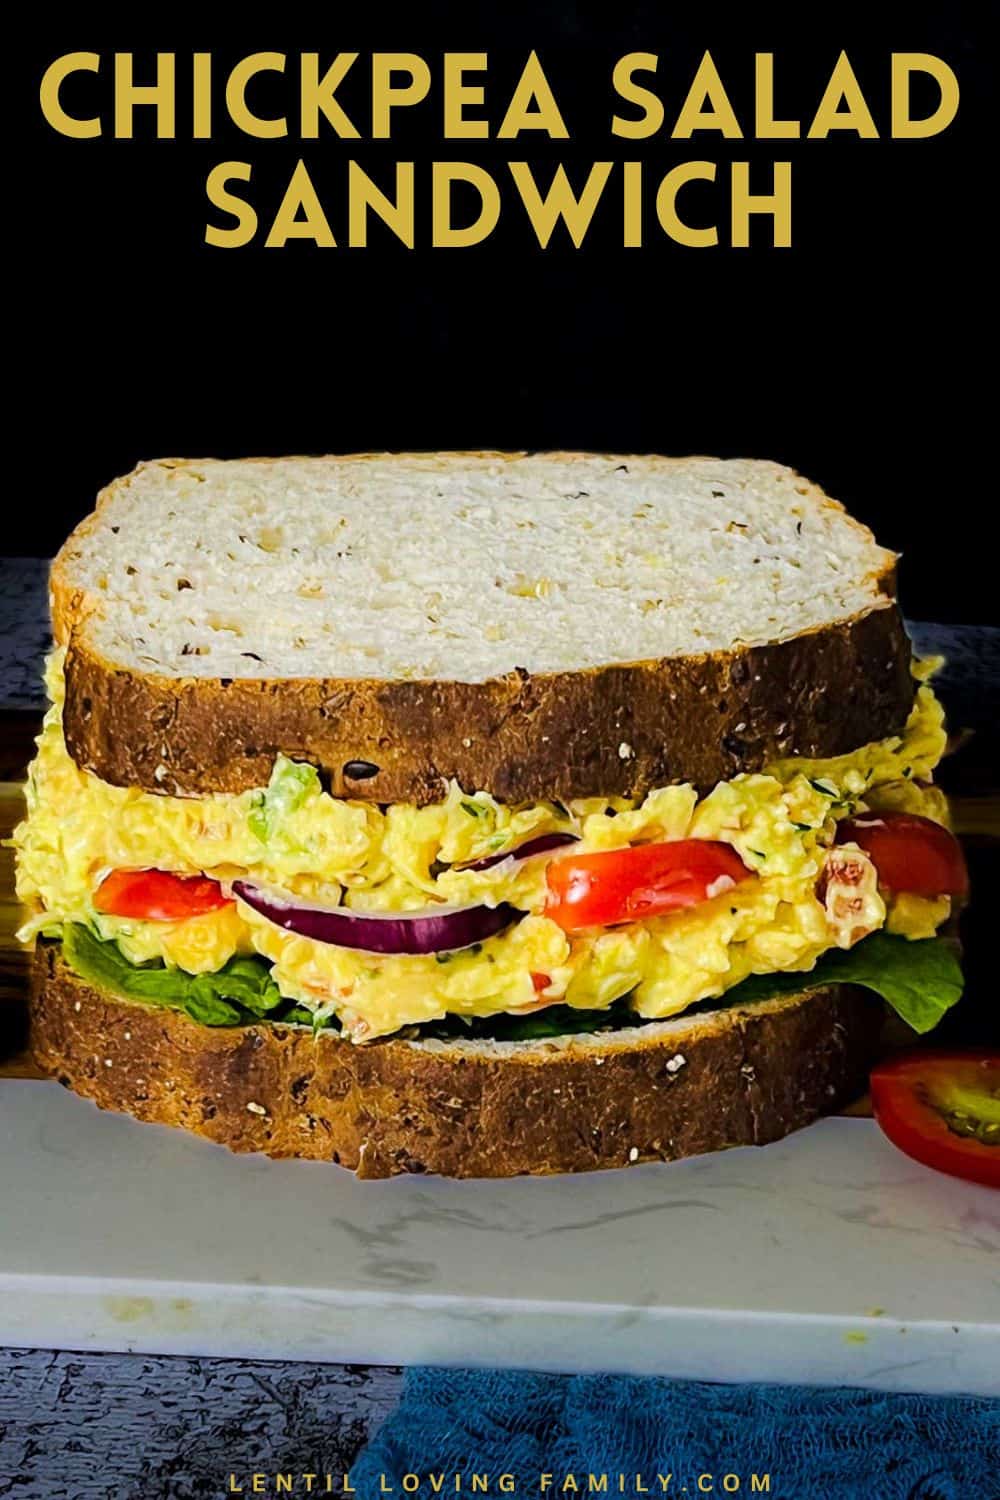 Chickpea salad sandwich Pinterest image.